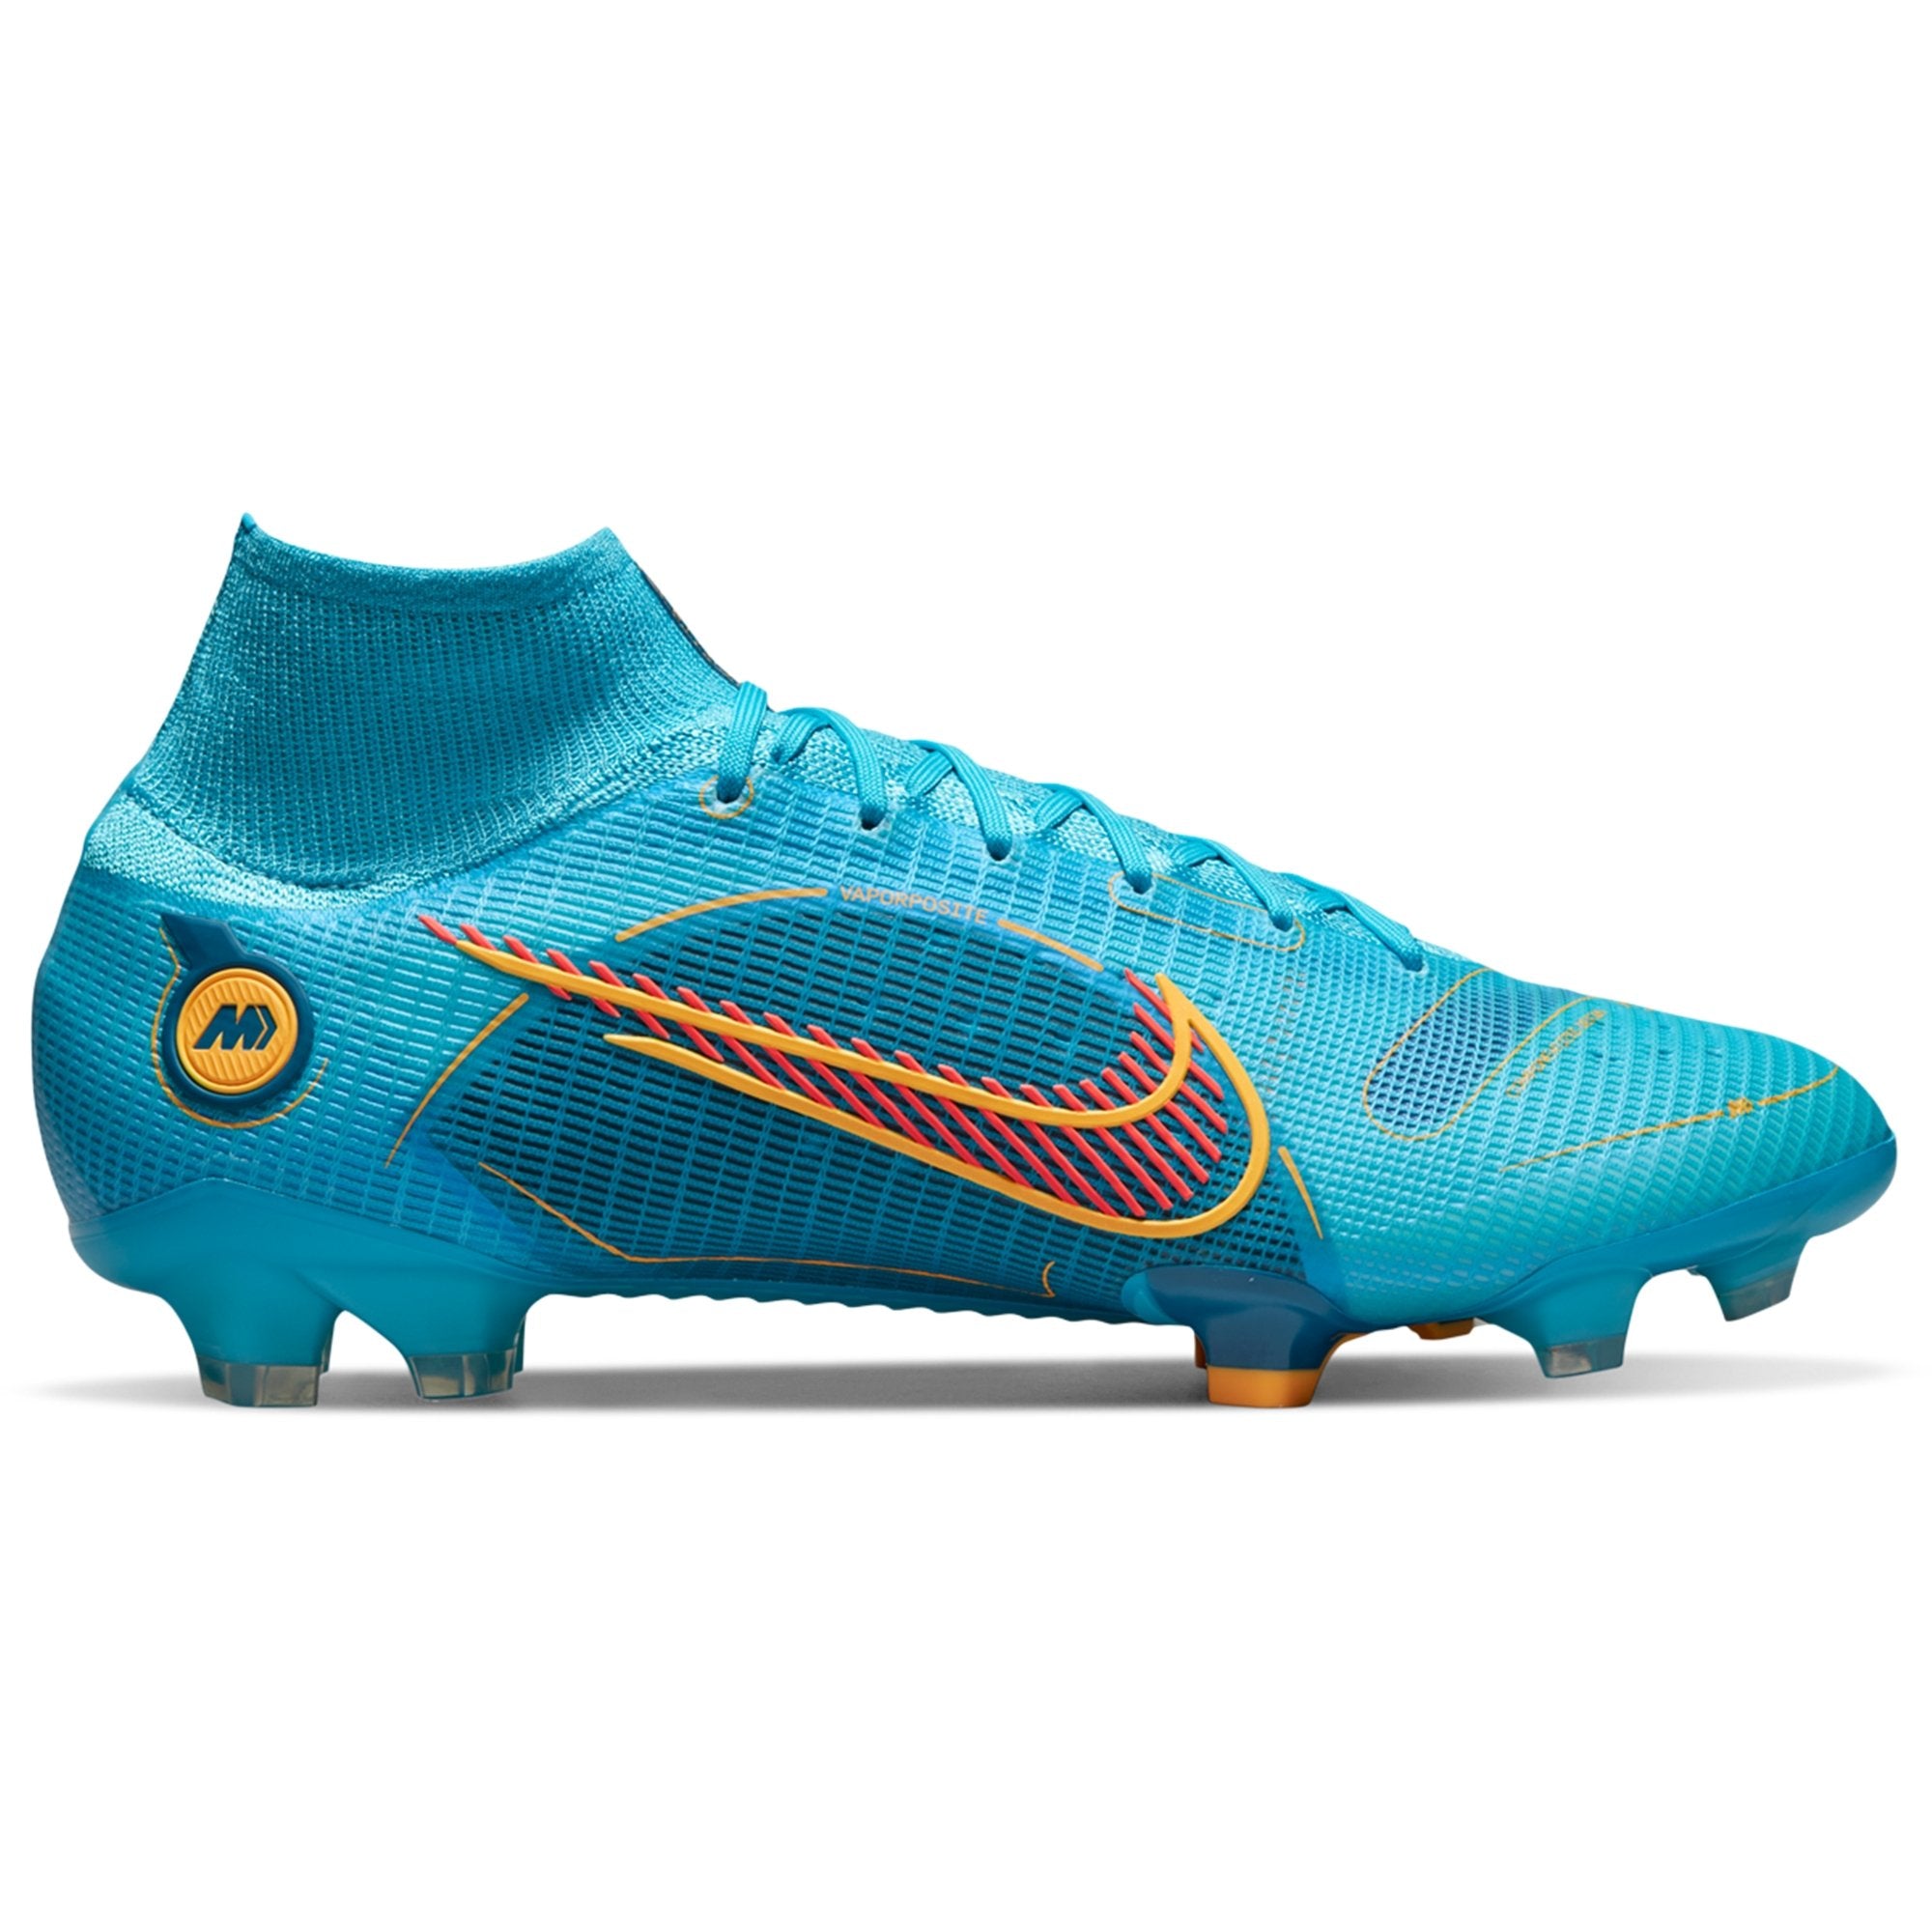 Nike Mercurial Superfly 8 FG Firm Ground Soccer Cleat - Chlorine Blue/Laser Orange/Marina/Bright Crimson DJ2839-484 Soccer Zone USA